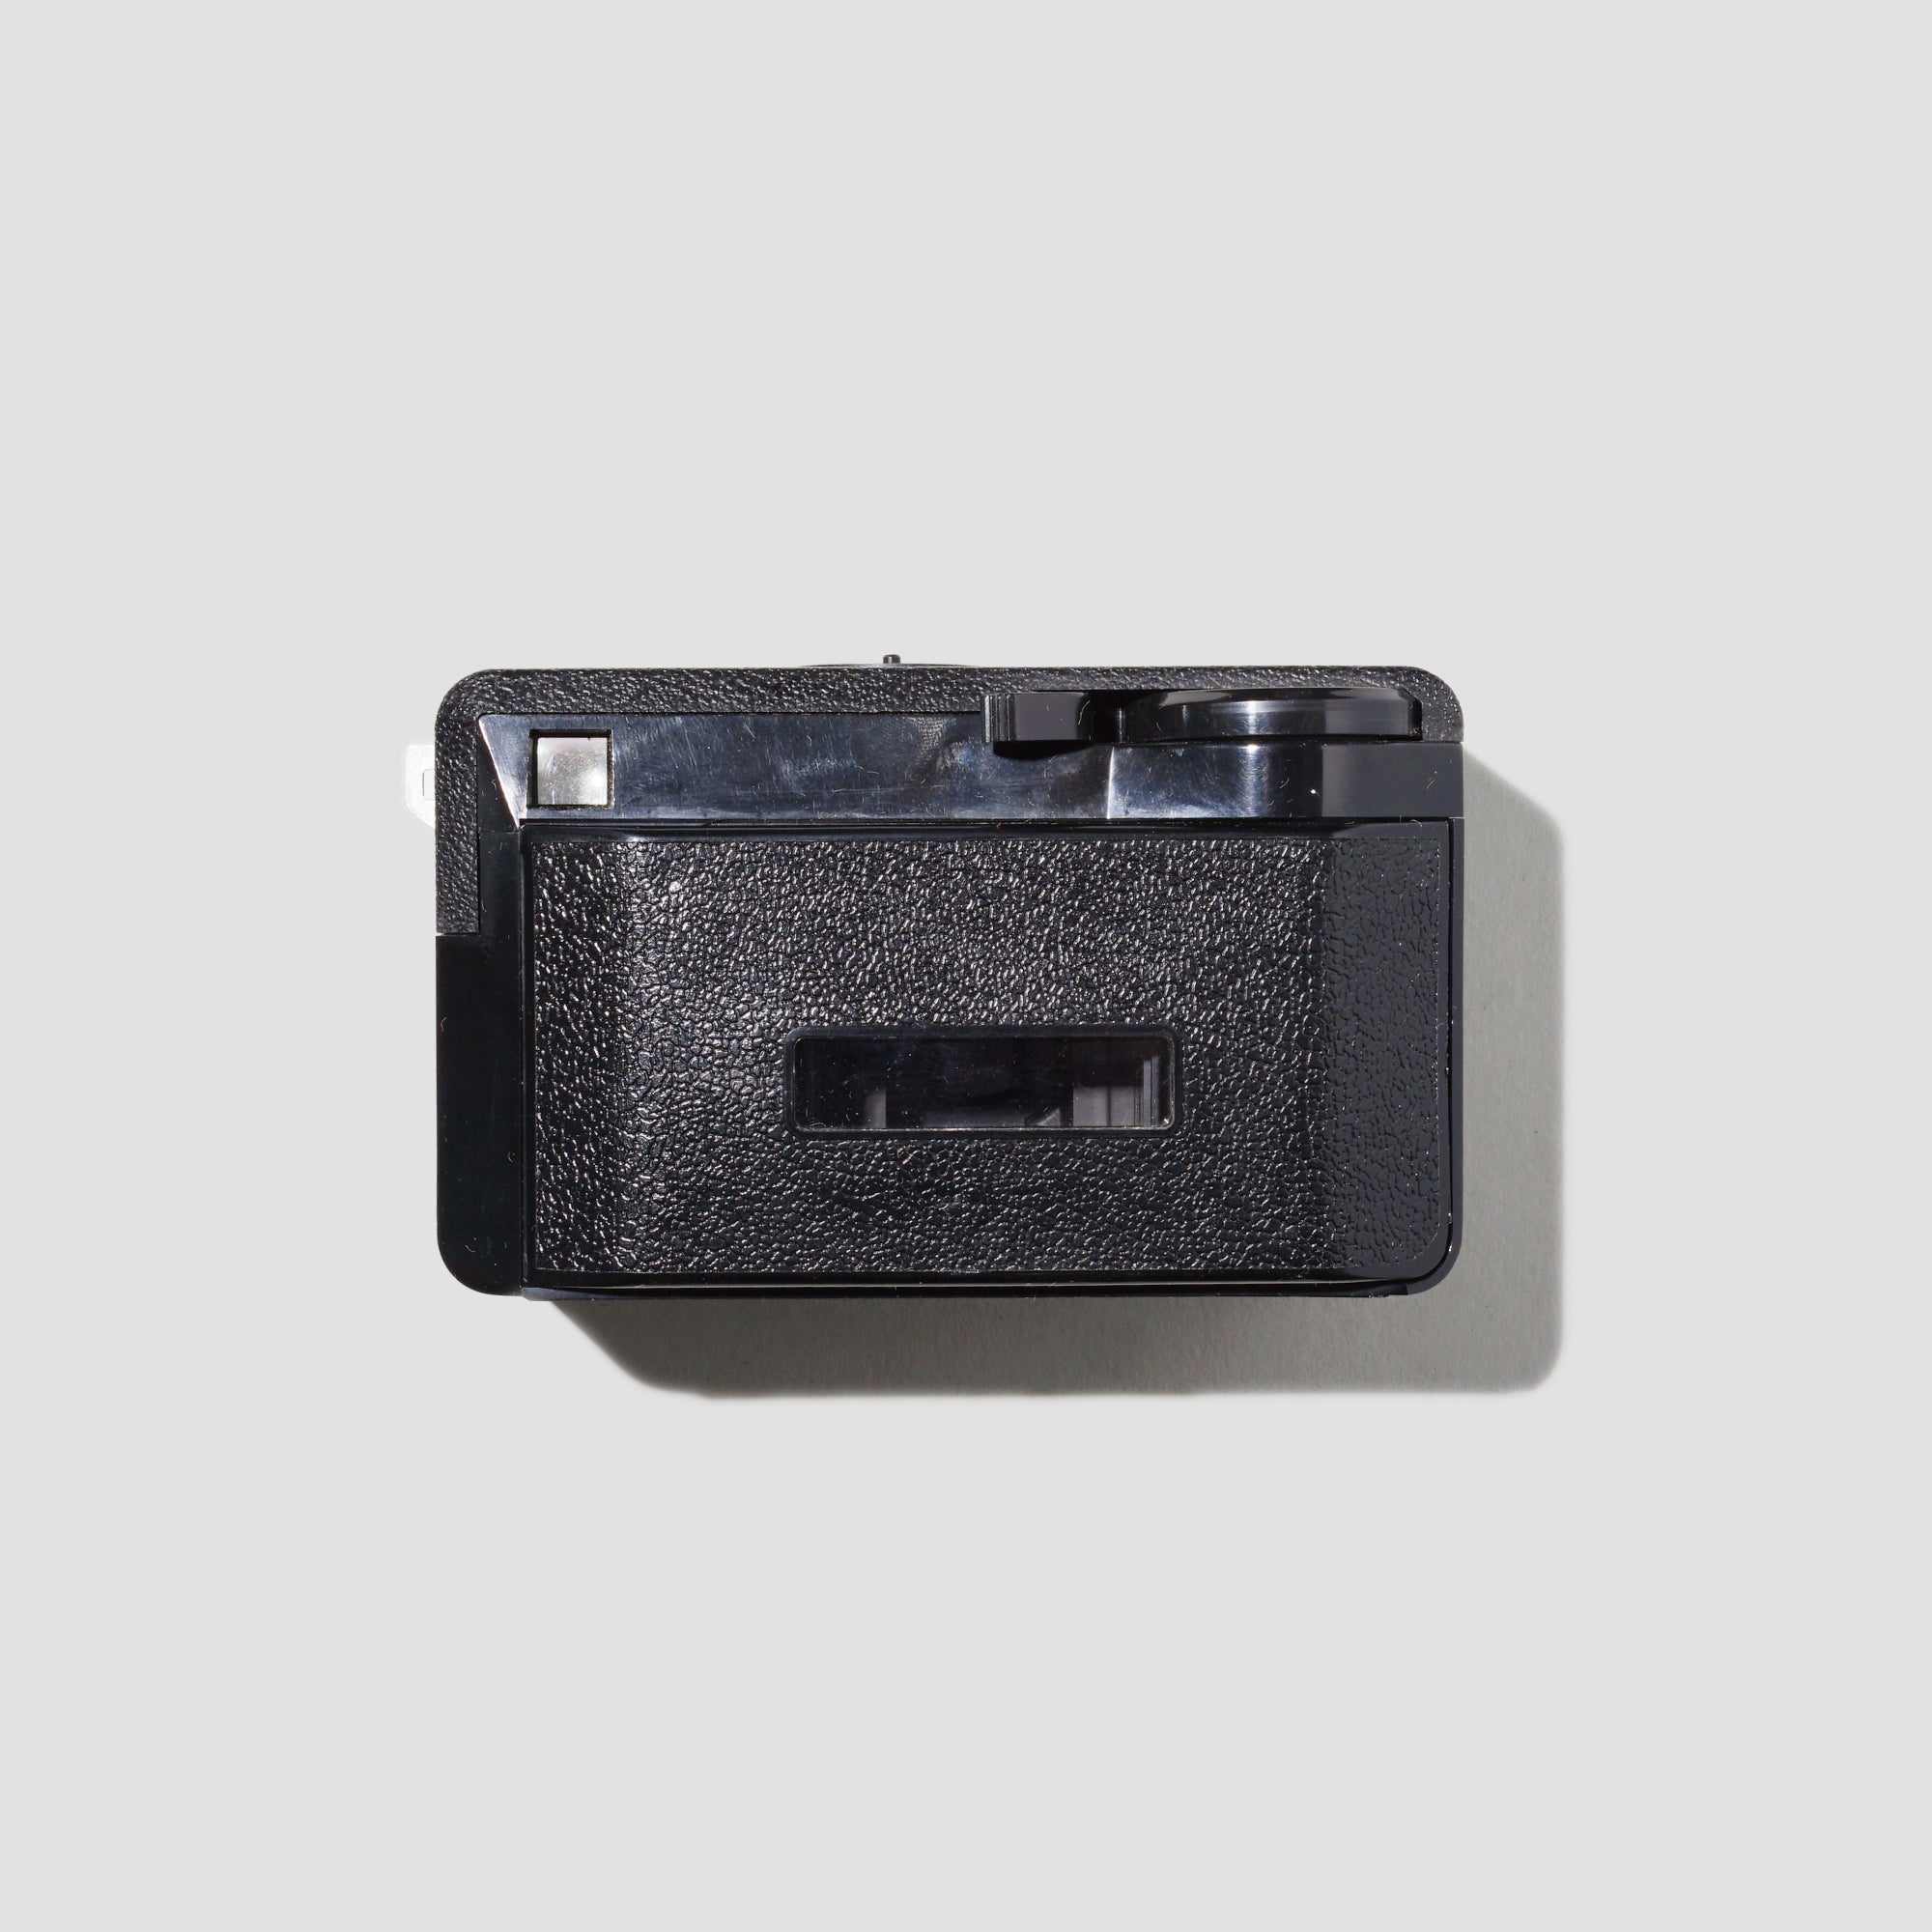 Buy Kodak Instamatic 155x now at Analogue Amsterdam